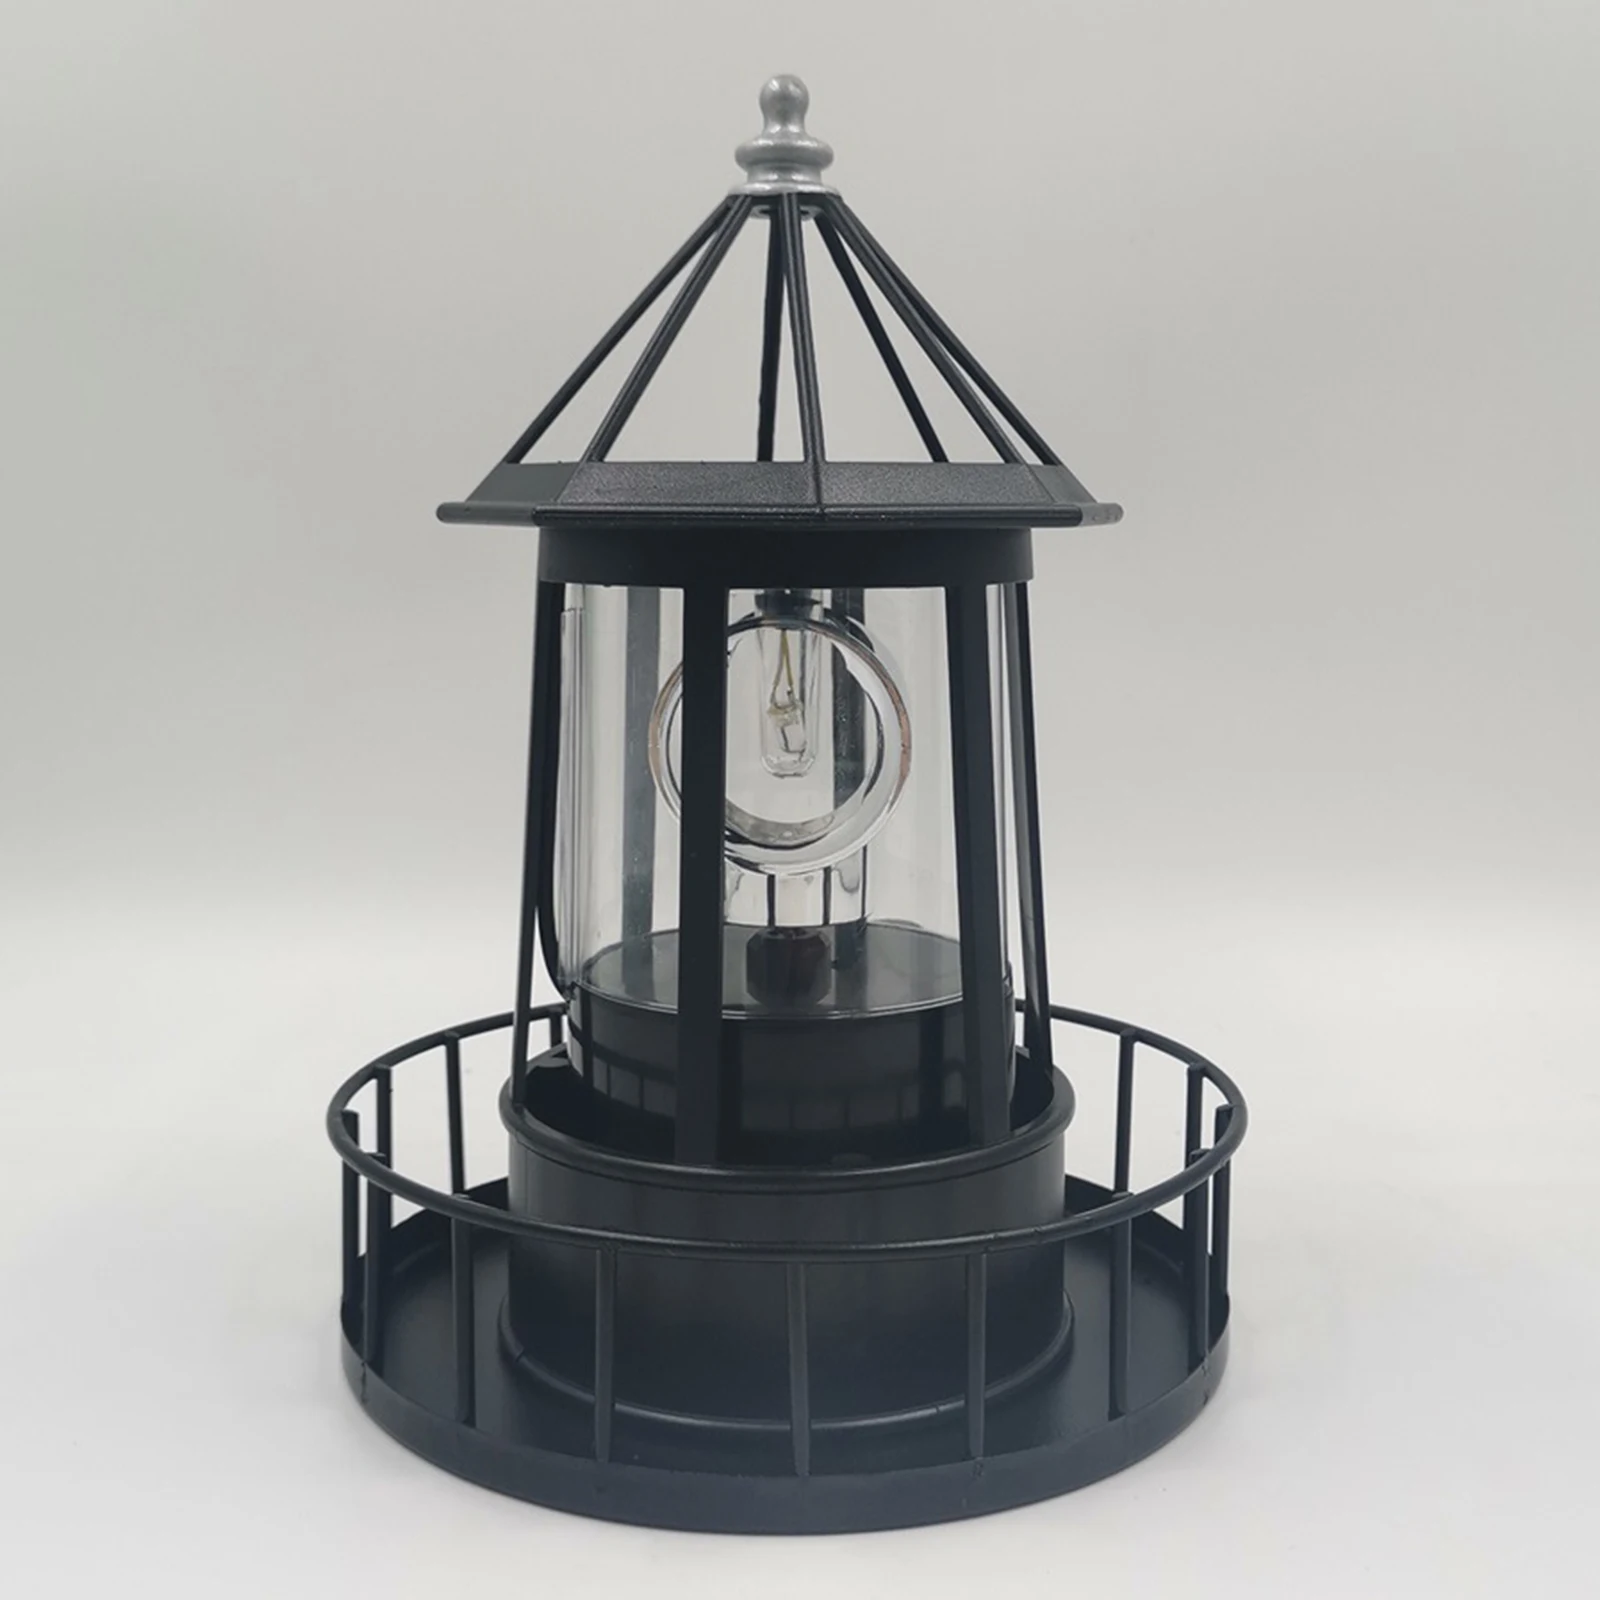 Lighthouse Solar LED Light Garden Yard Outdoor Decoration Smart Sensor Beacon Rotating Lamp